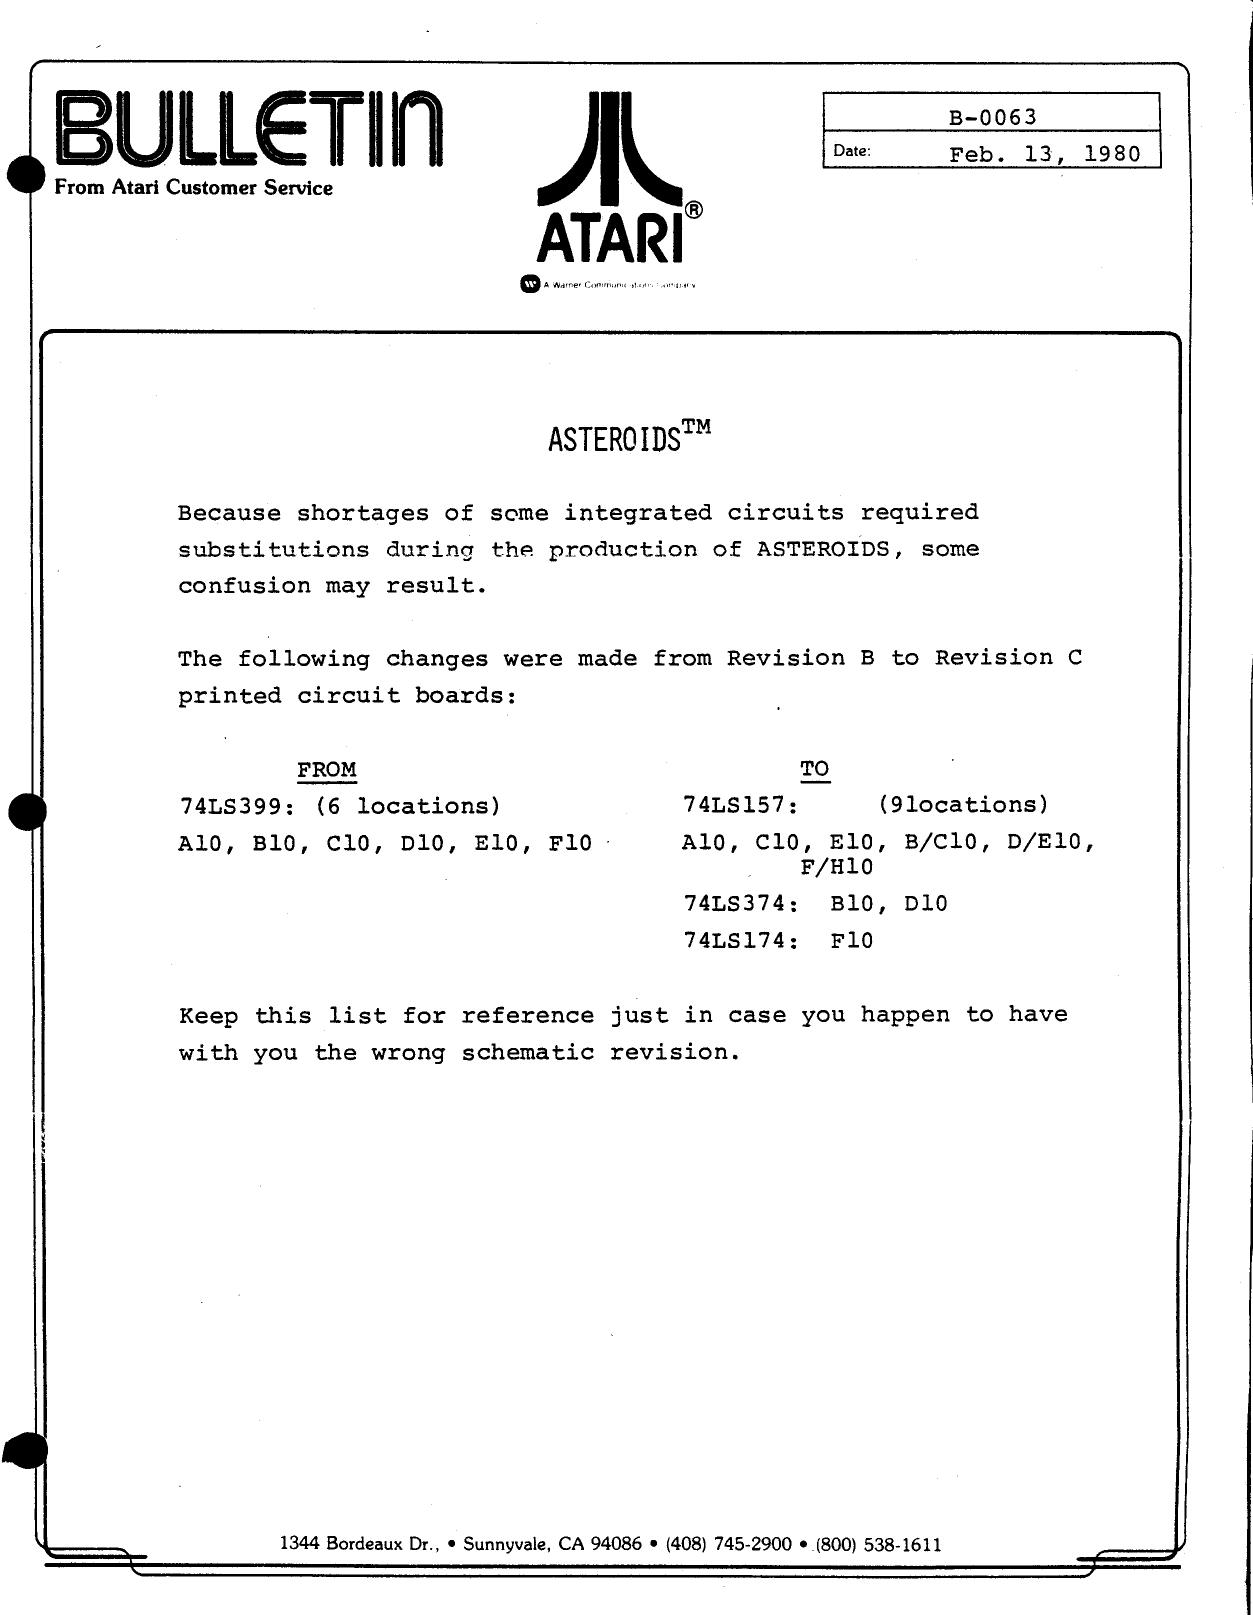 Asteroids Bulletin Feb 1980